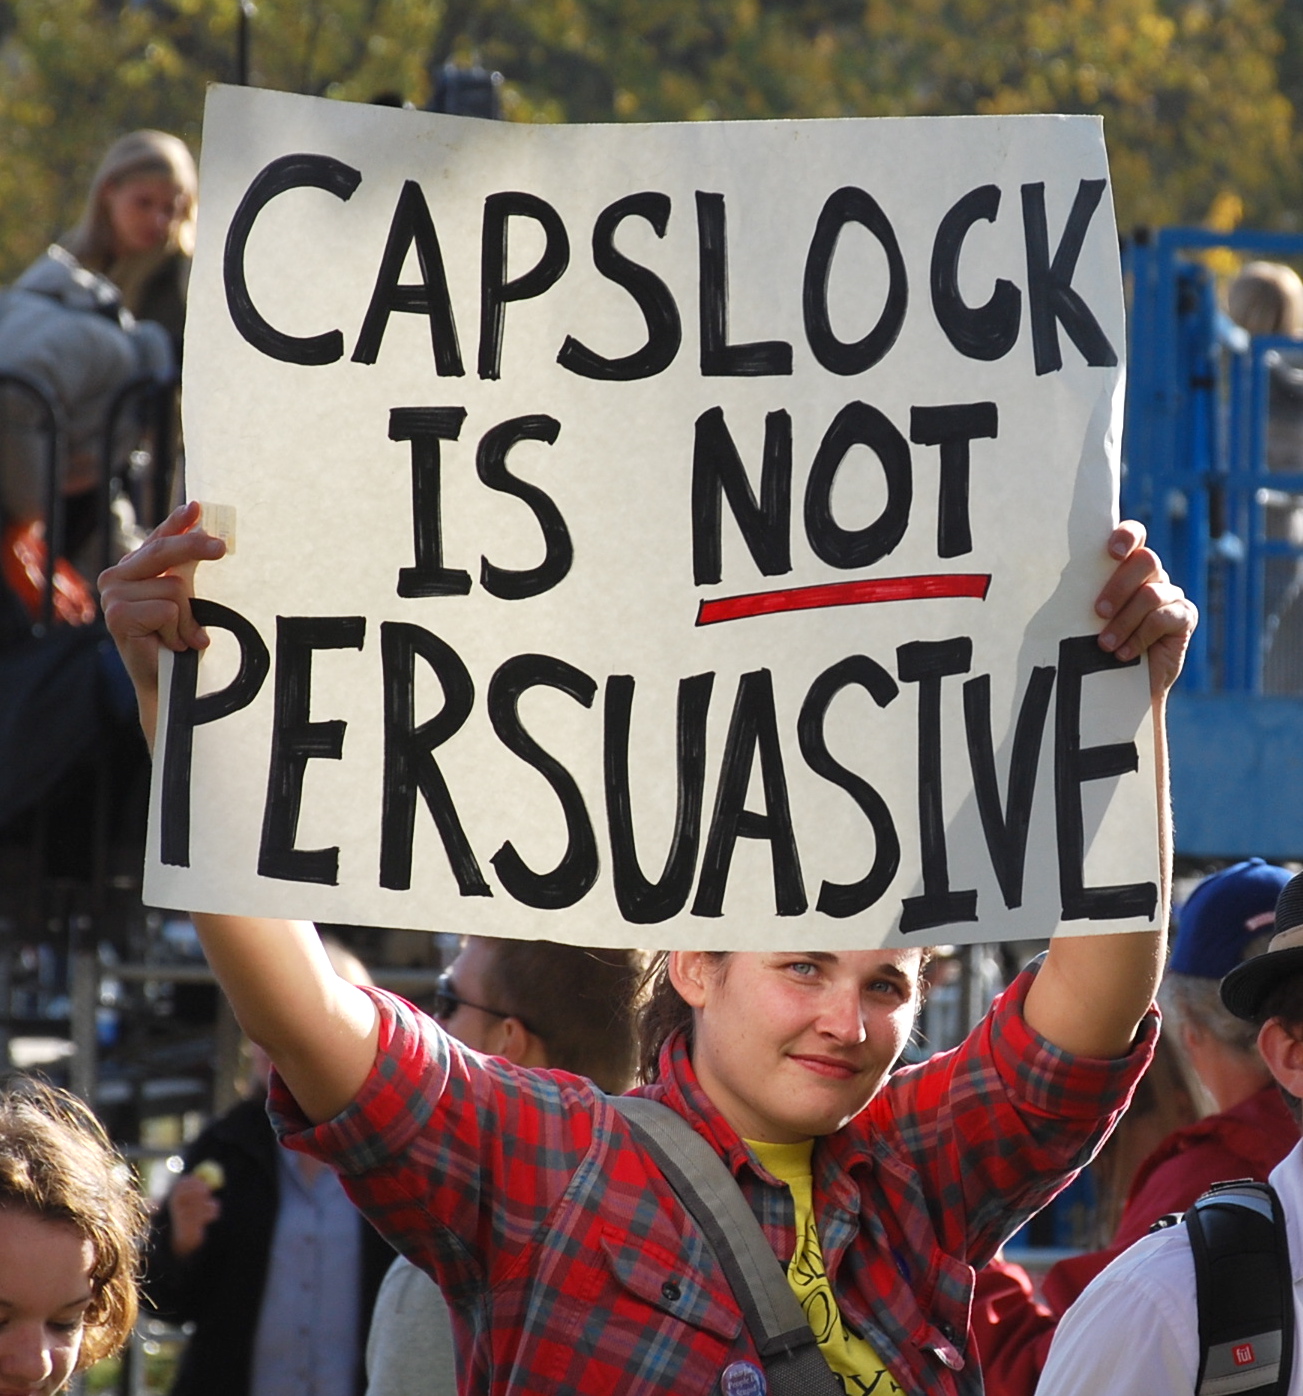 Capslock is NOT persuasive